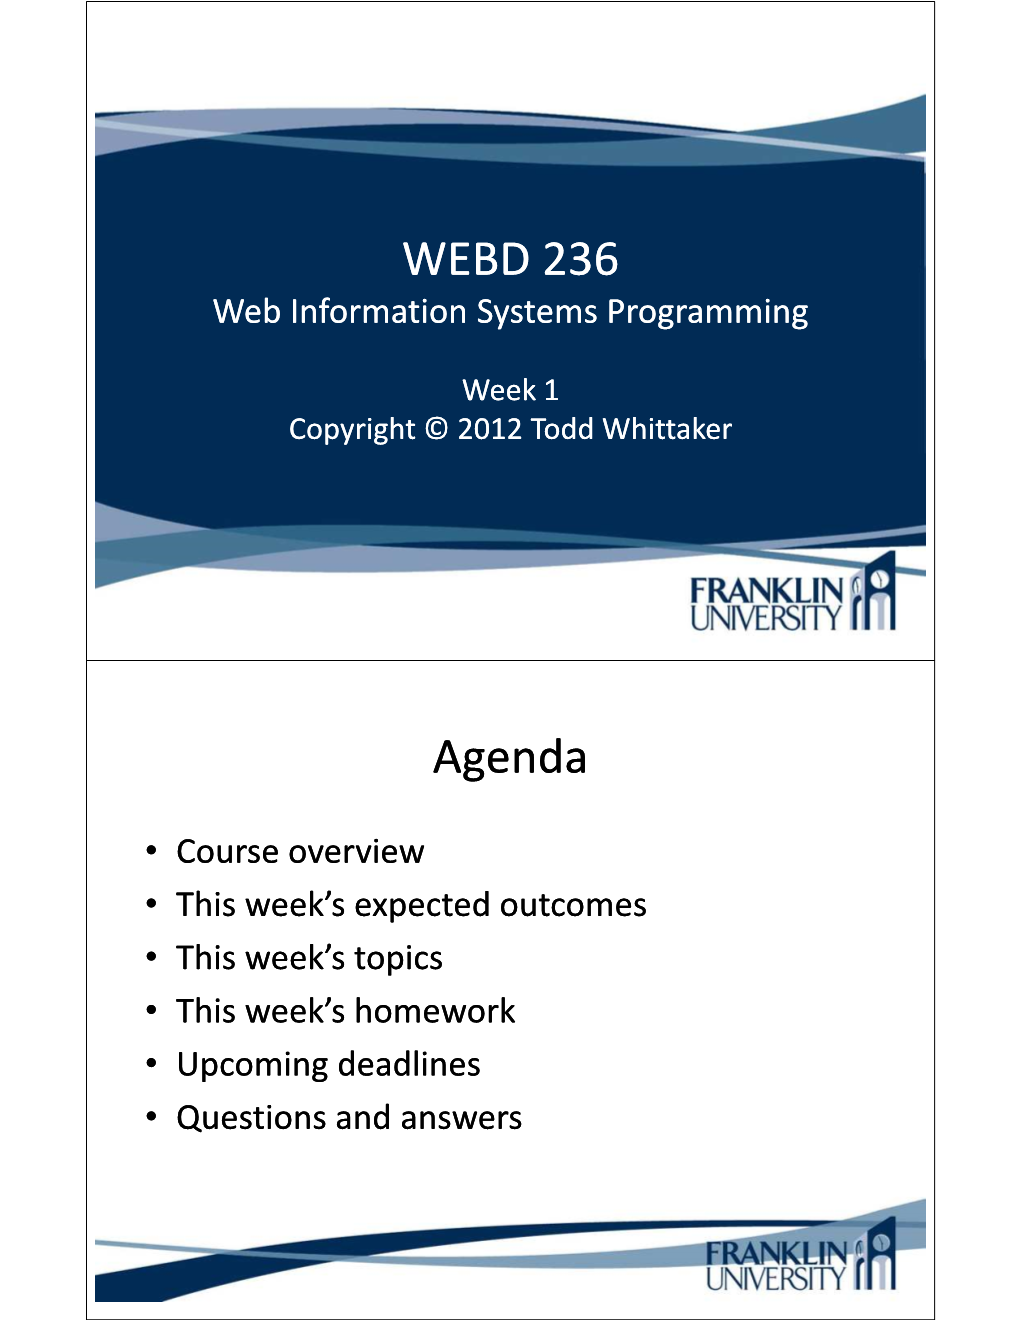 WEBD 236 Agenda